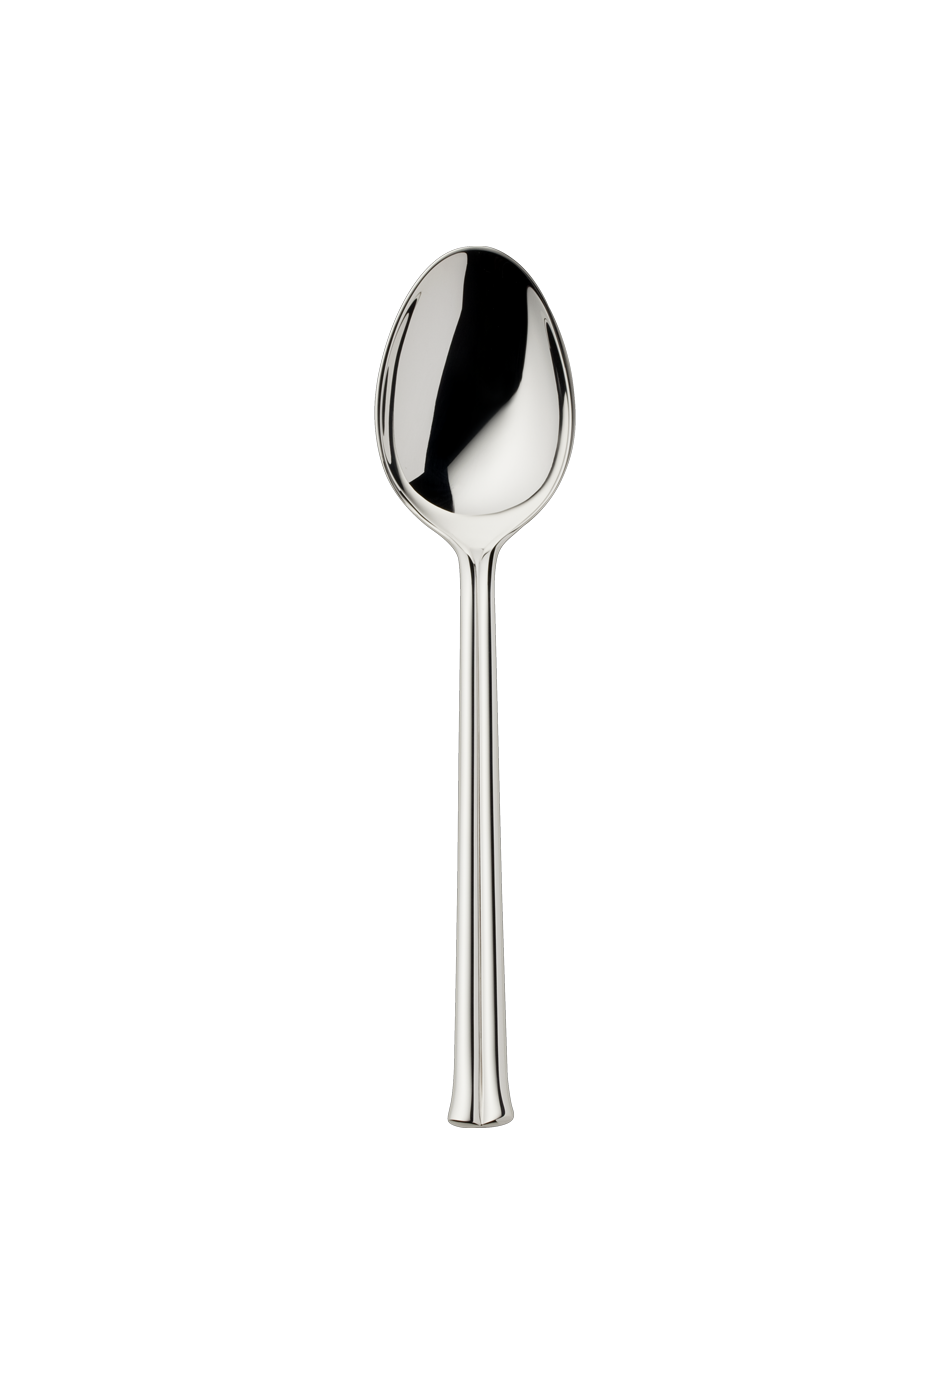 Viva Dessert Spoon (150g massive silverplated)